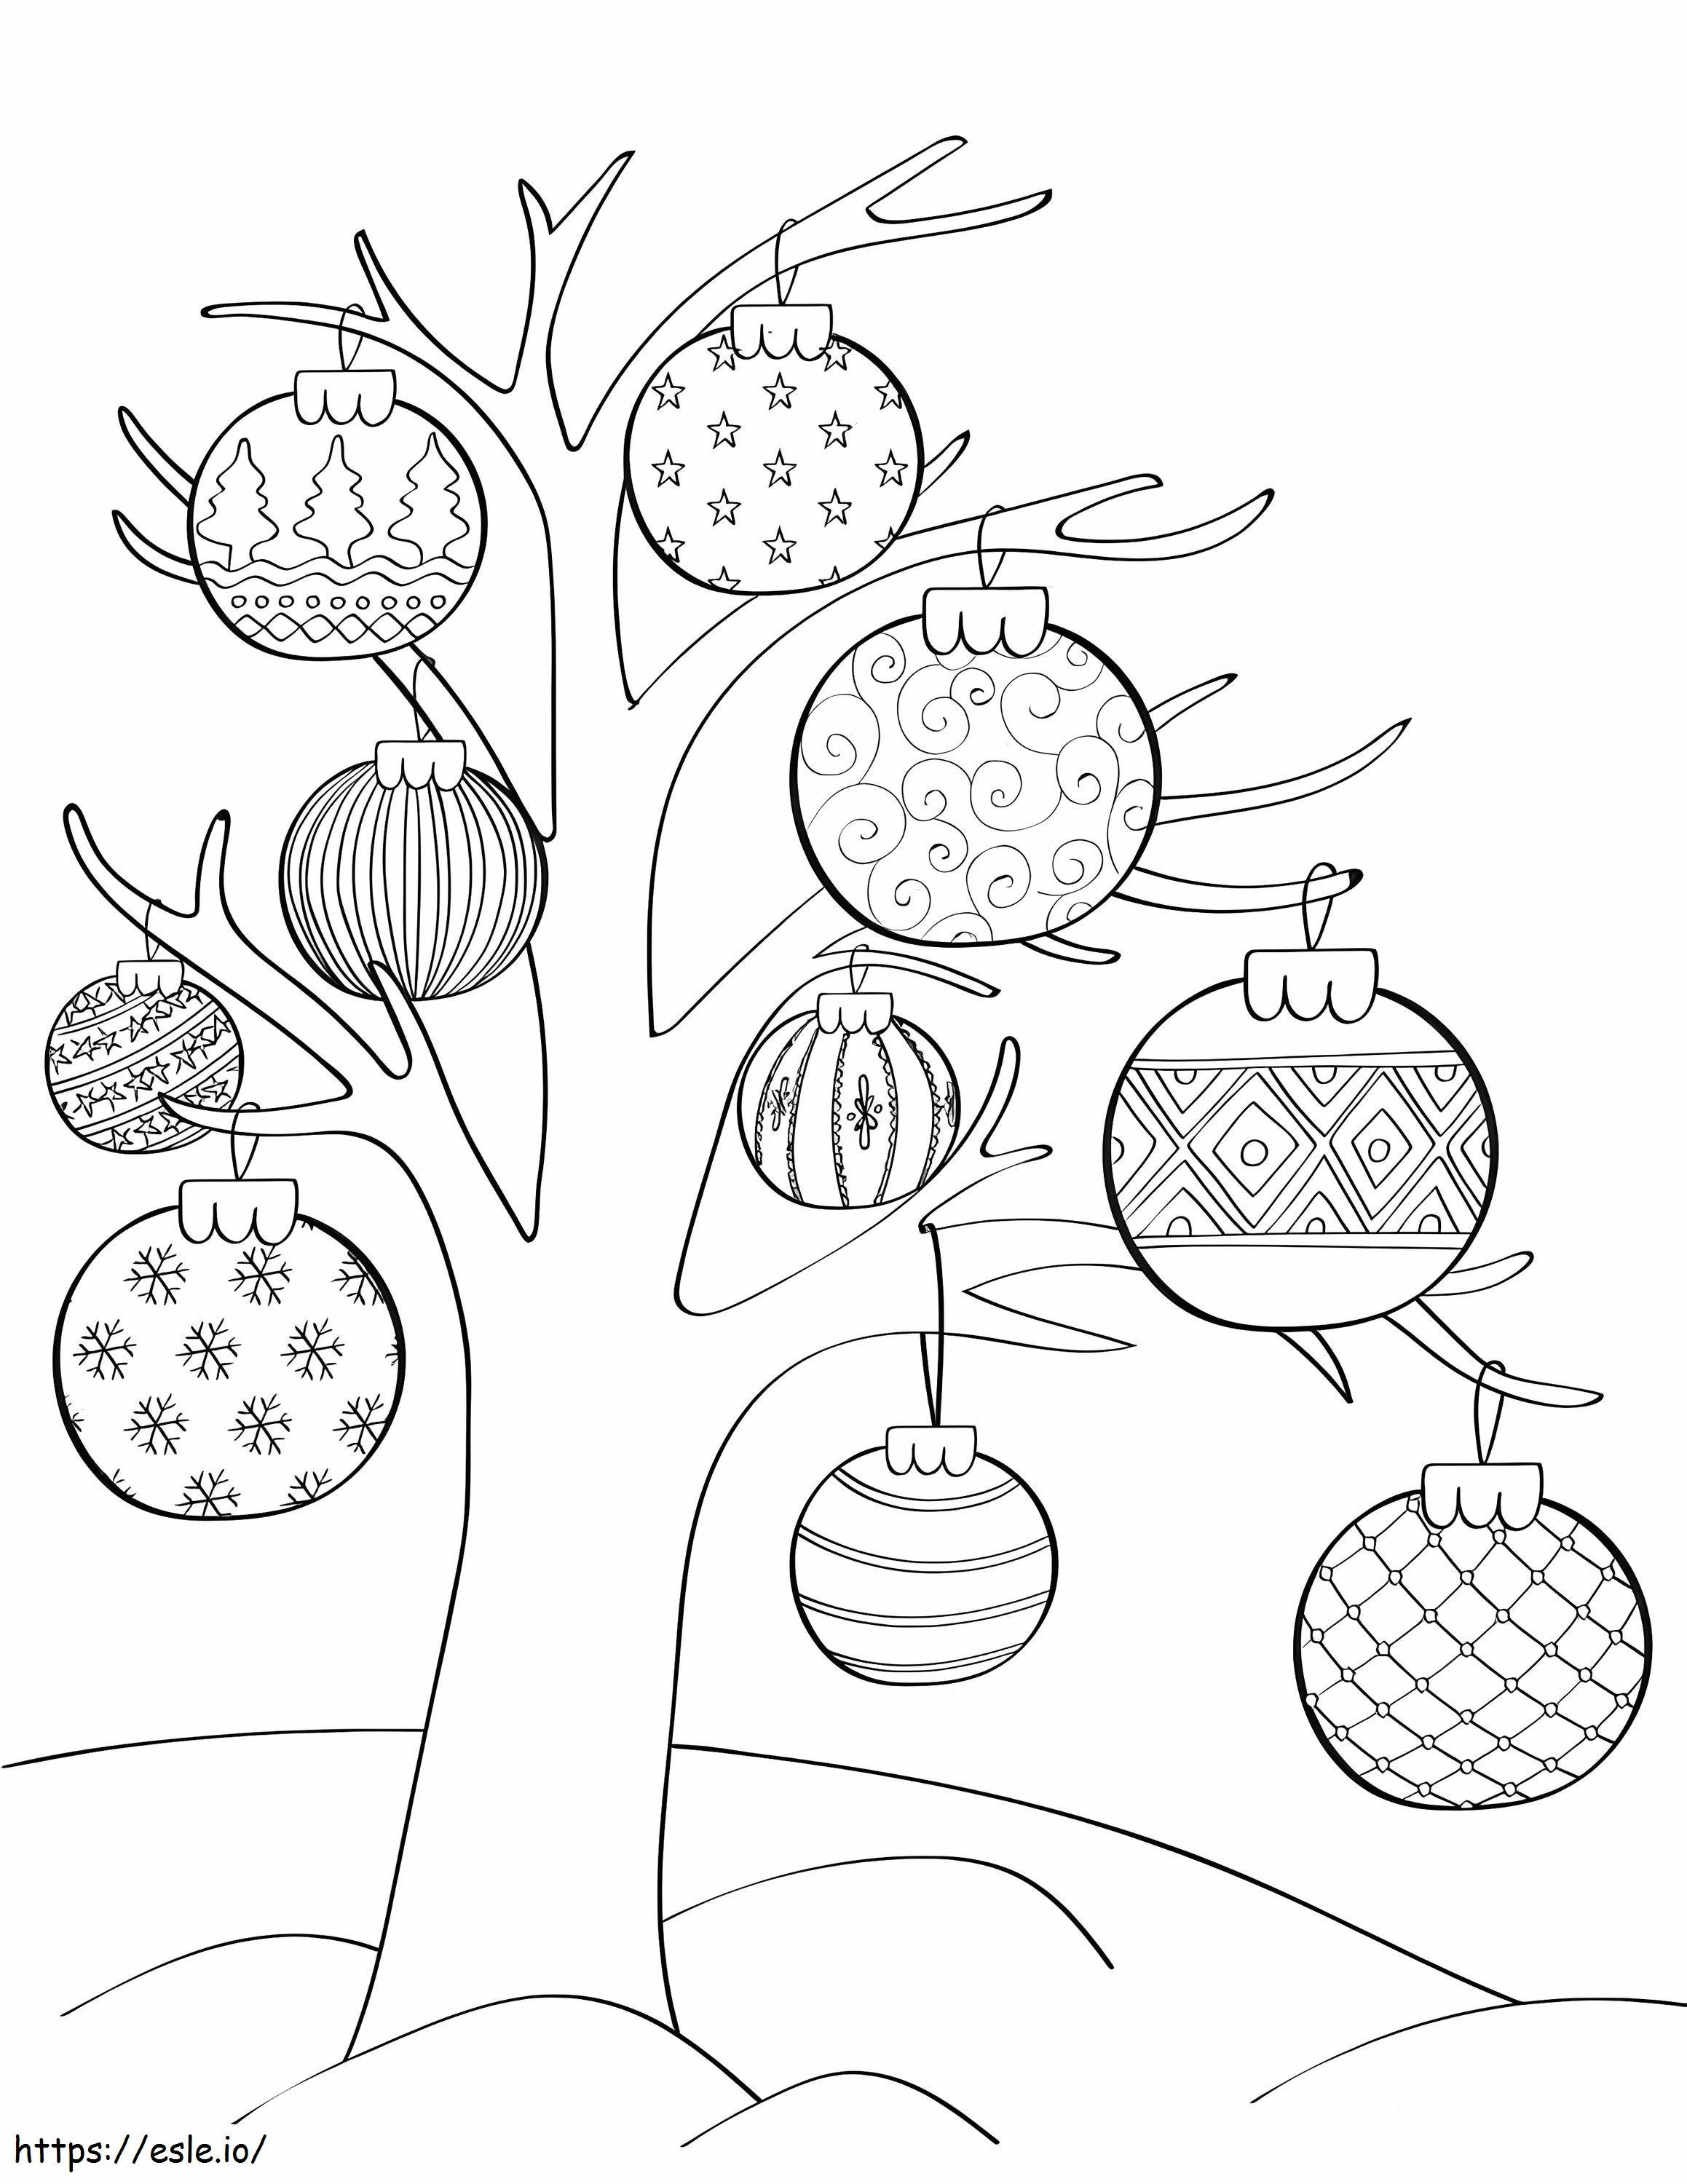 Ornament am Baum ausmalbilder